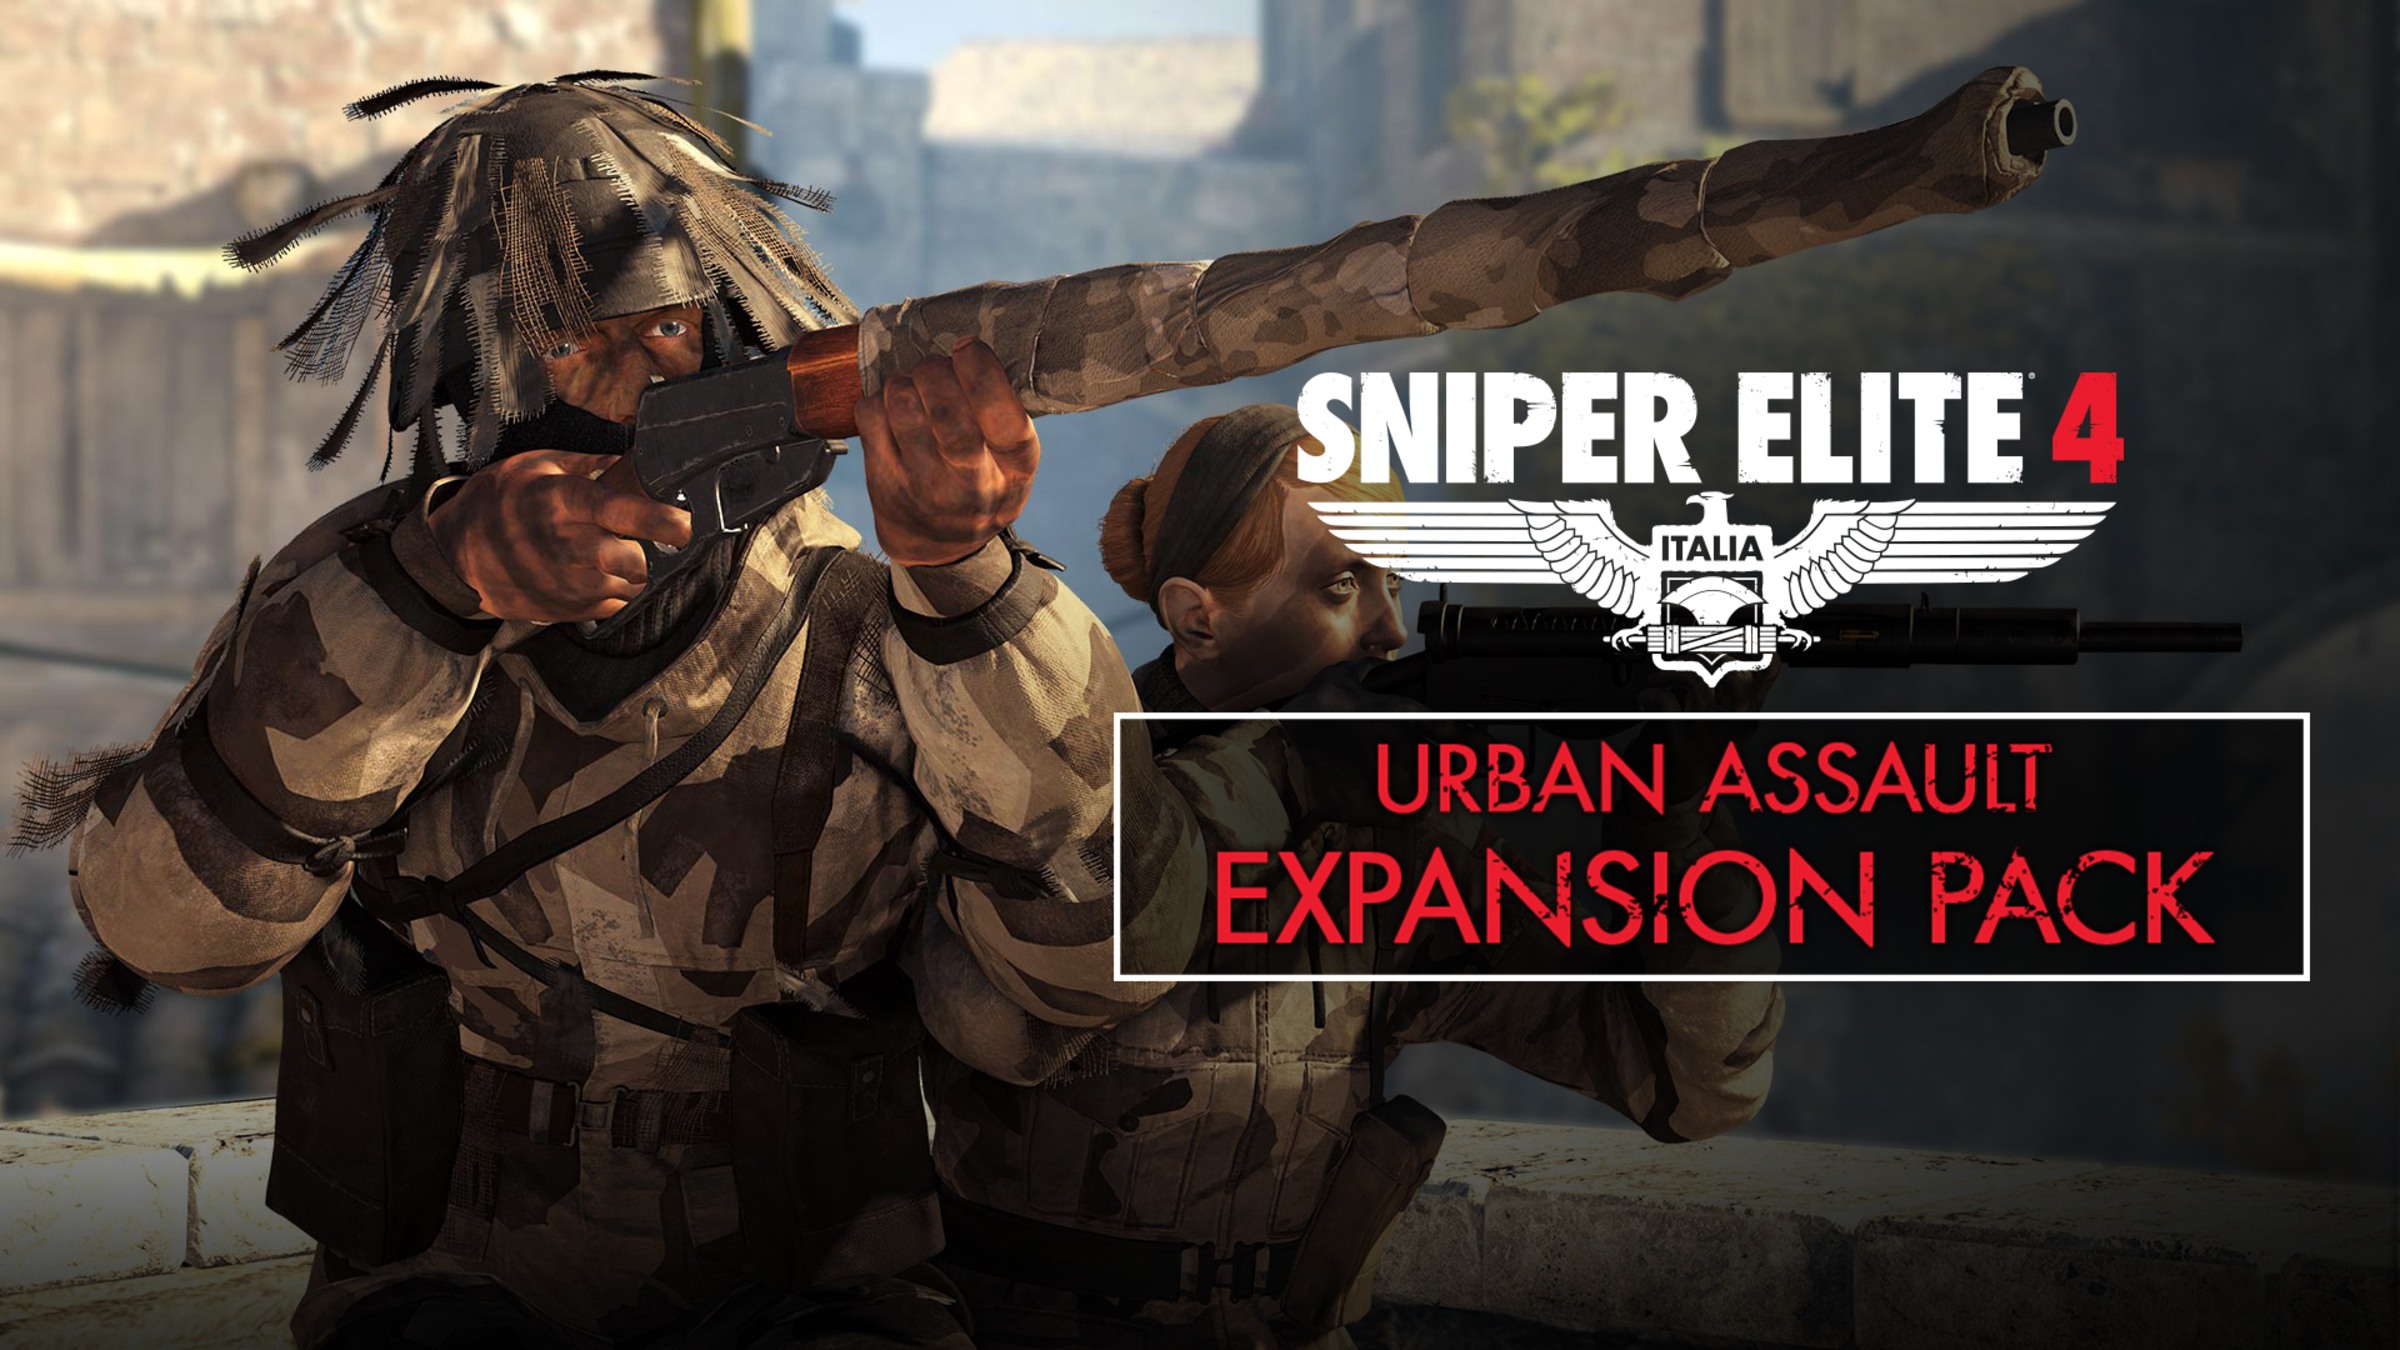 Sniper Elite 4 - Urban Assault Expansion Pack for Nintendo Switch